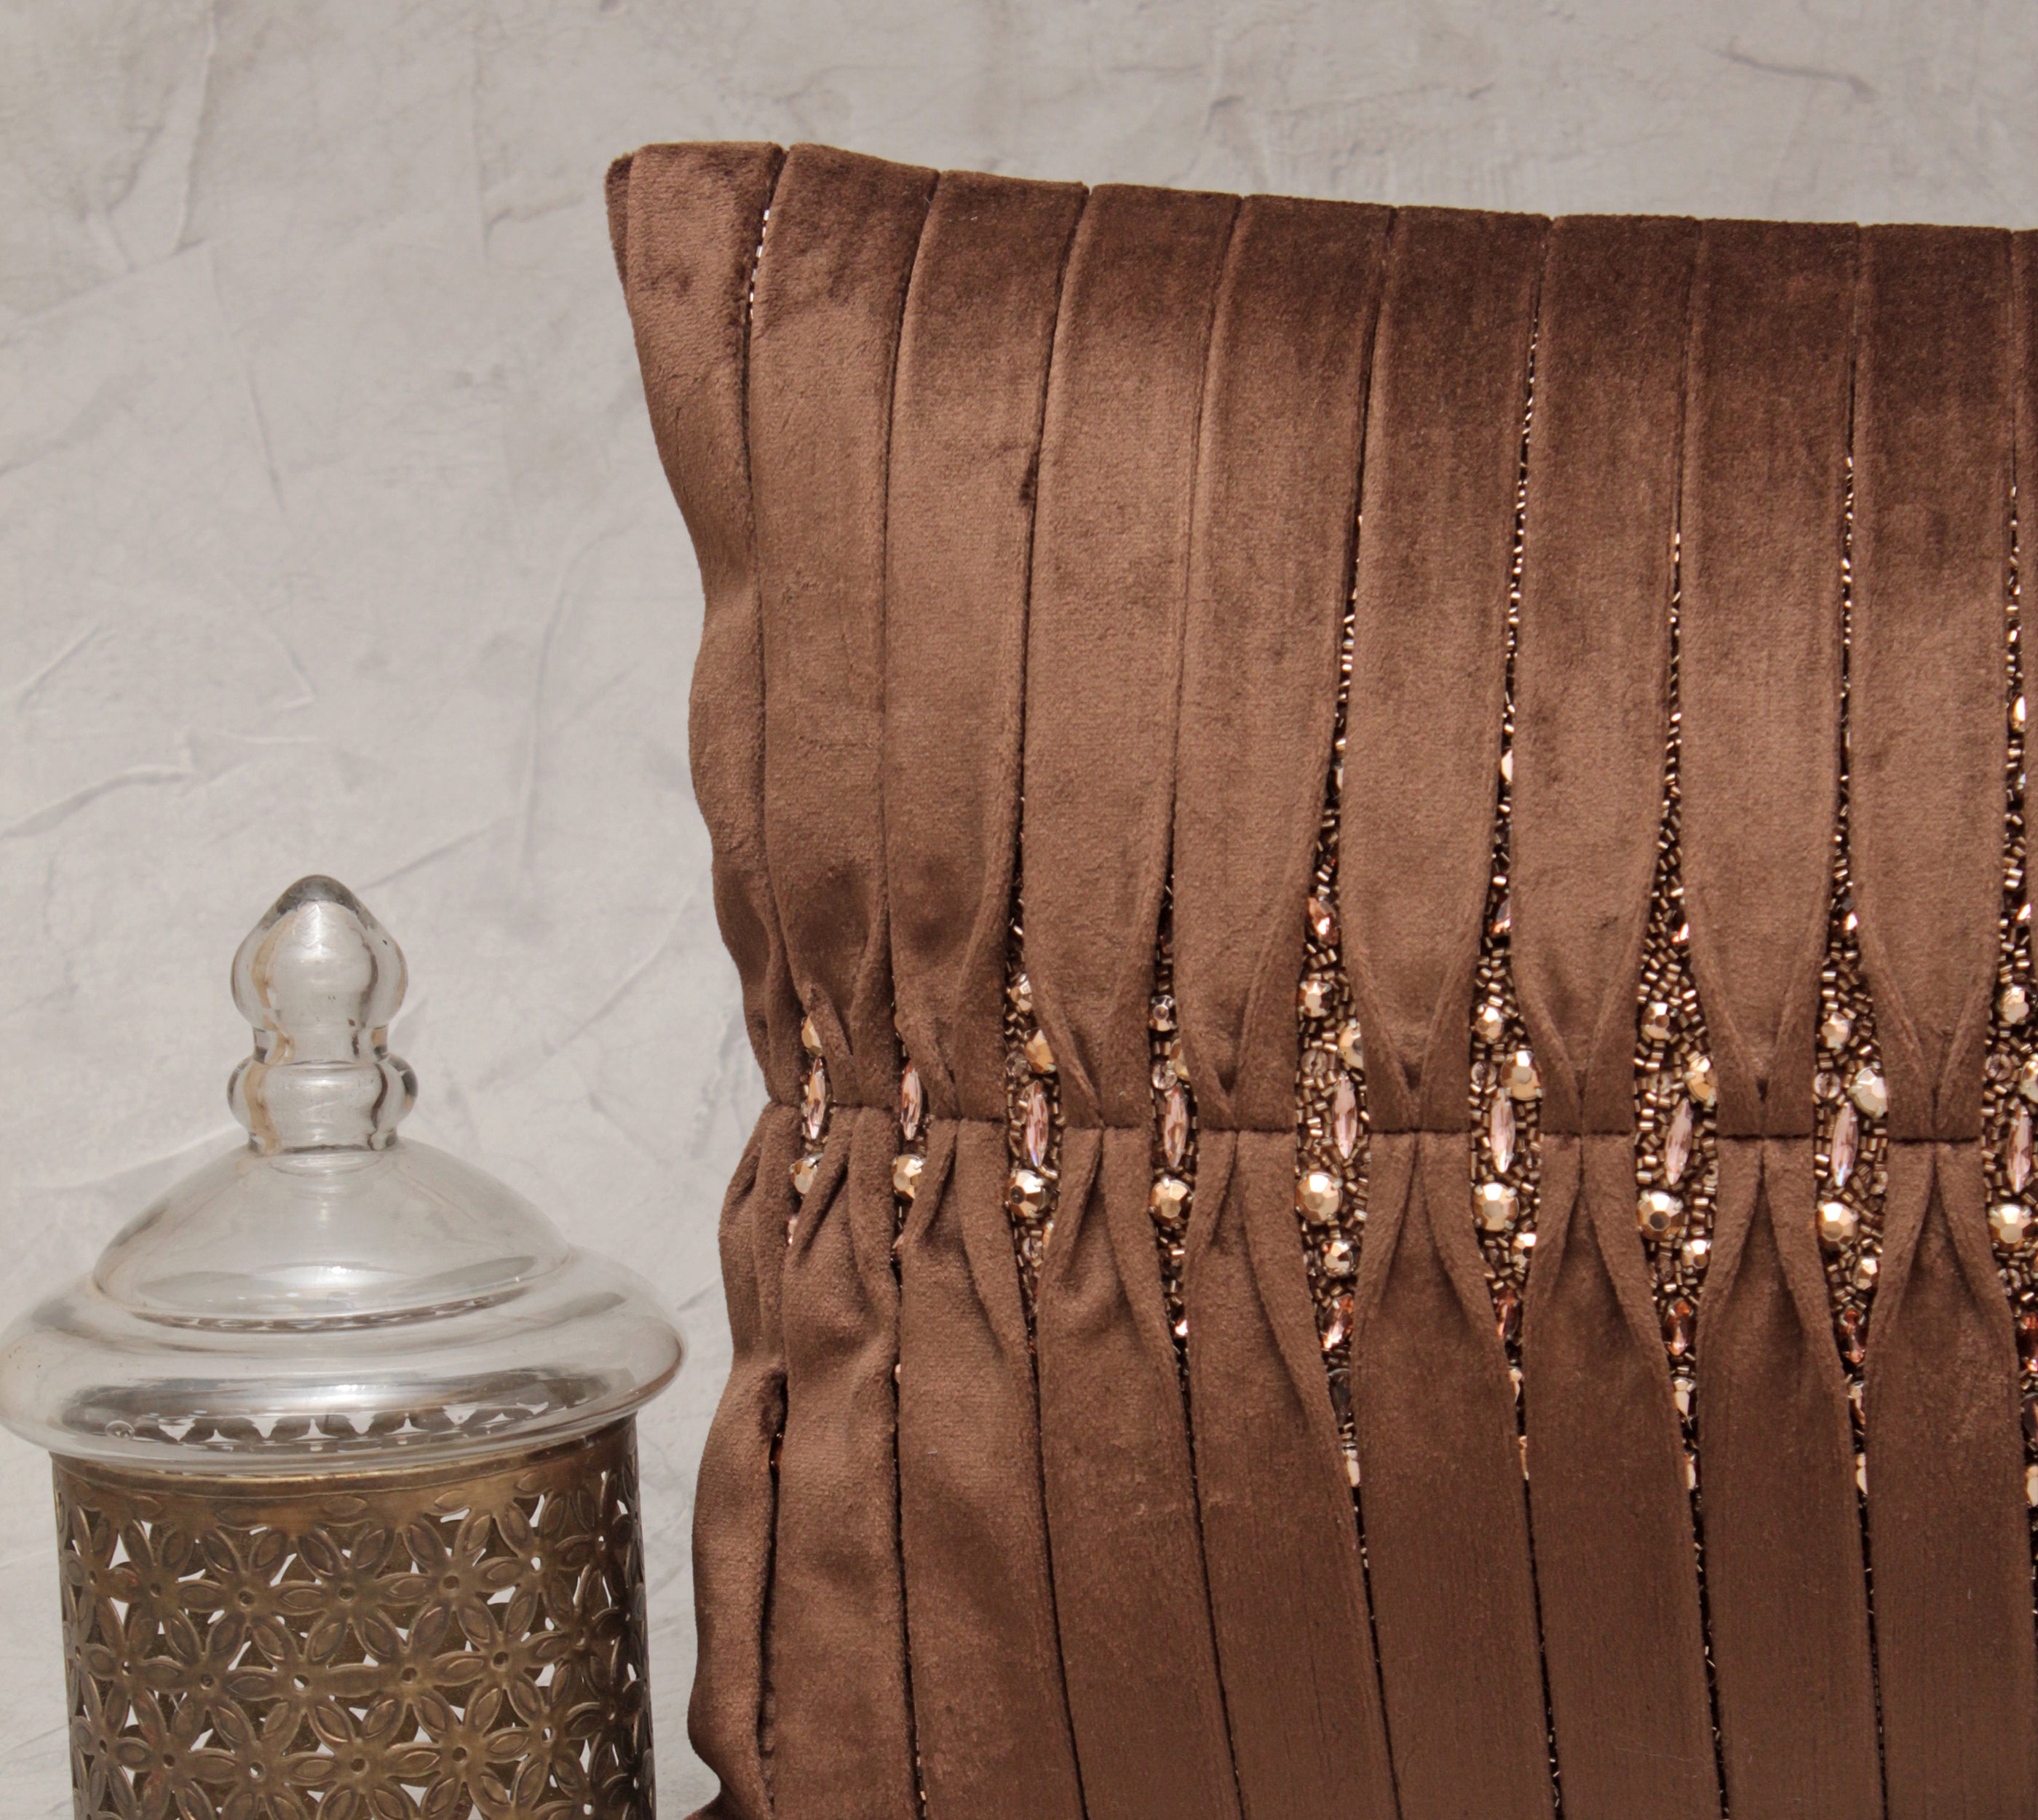 MIA Brown Velvet Pleated Cushion Cover